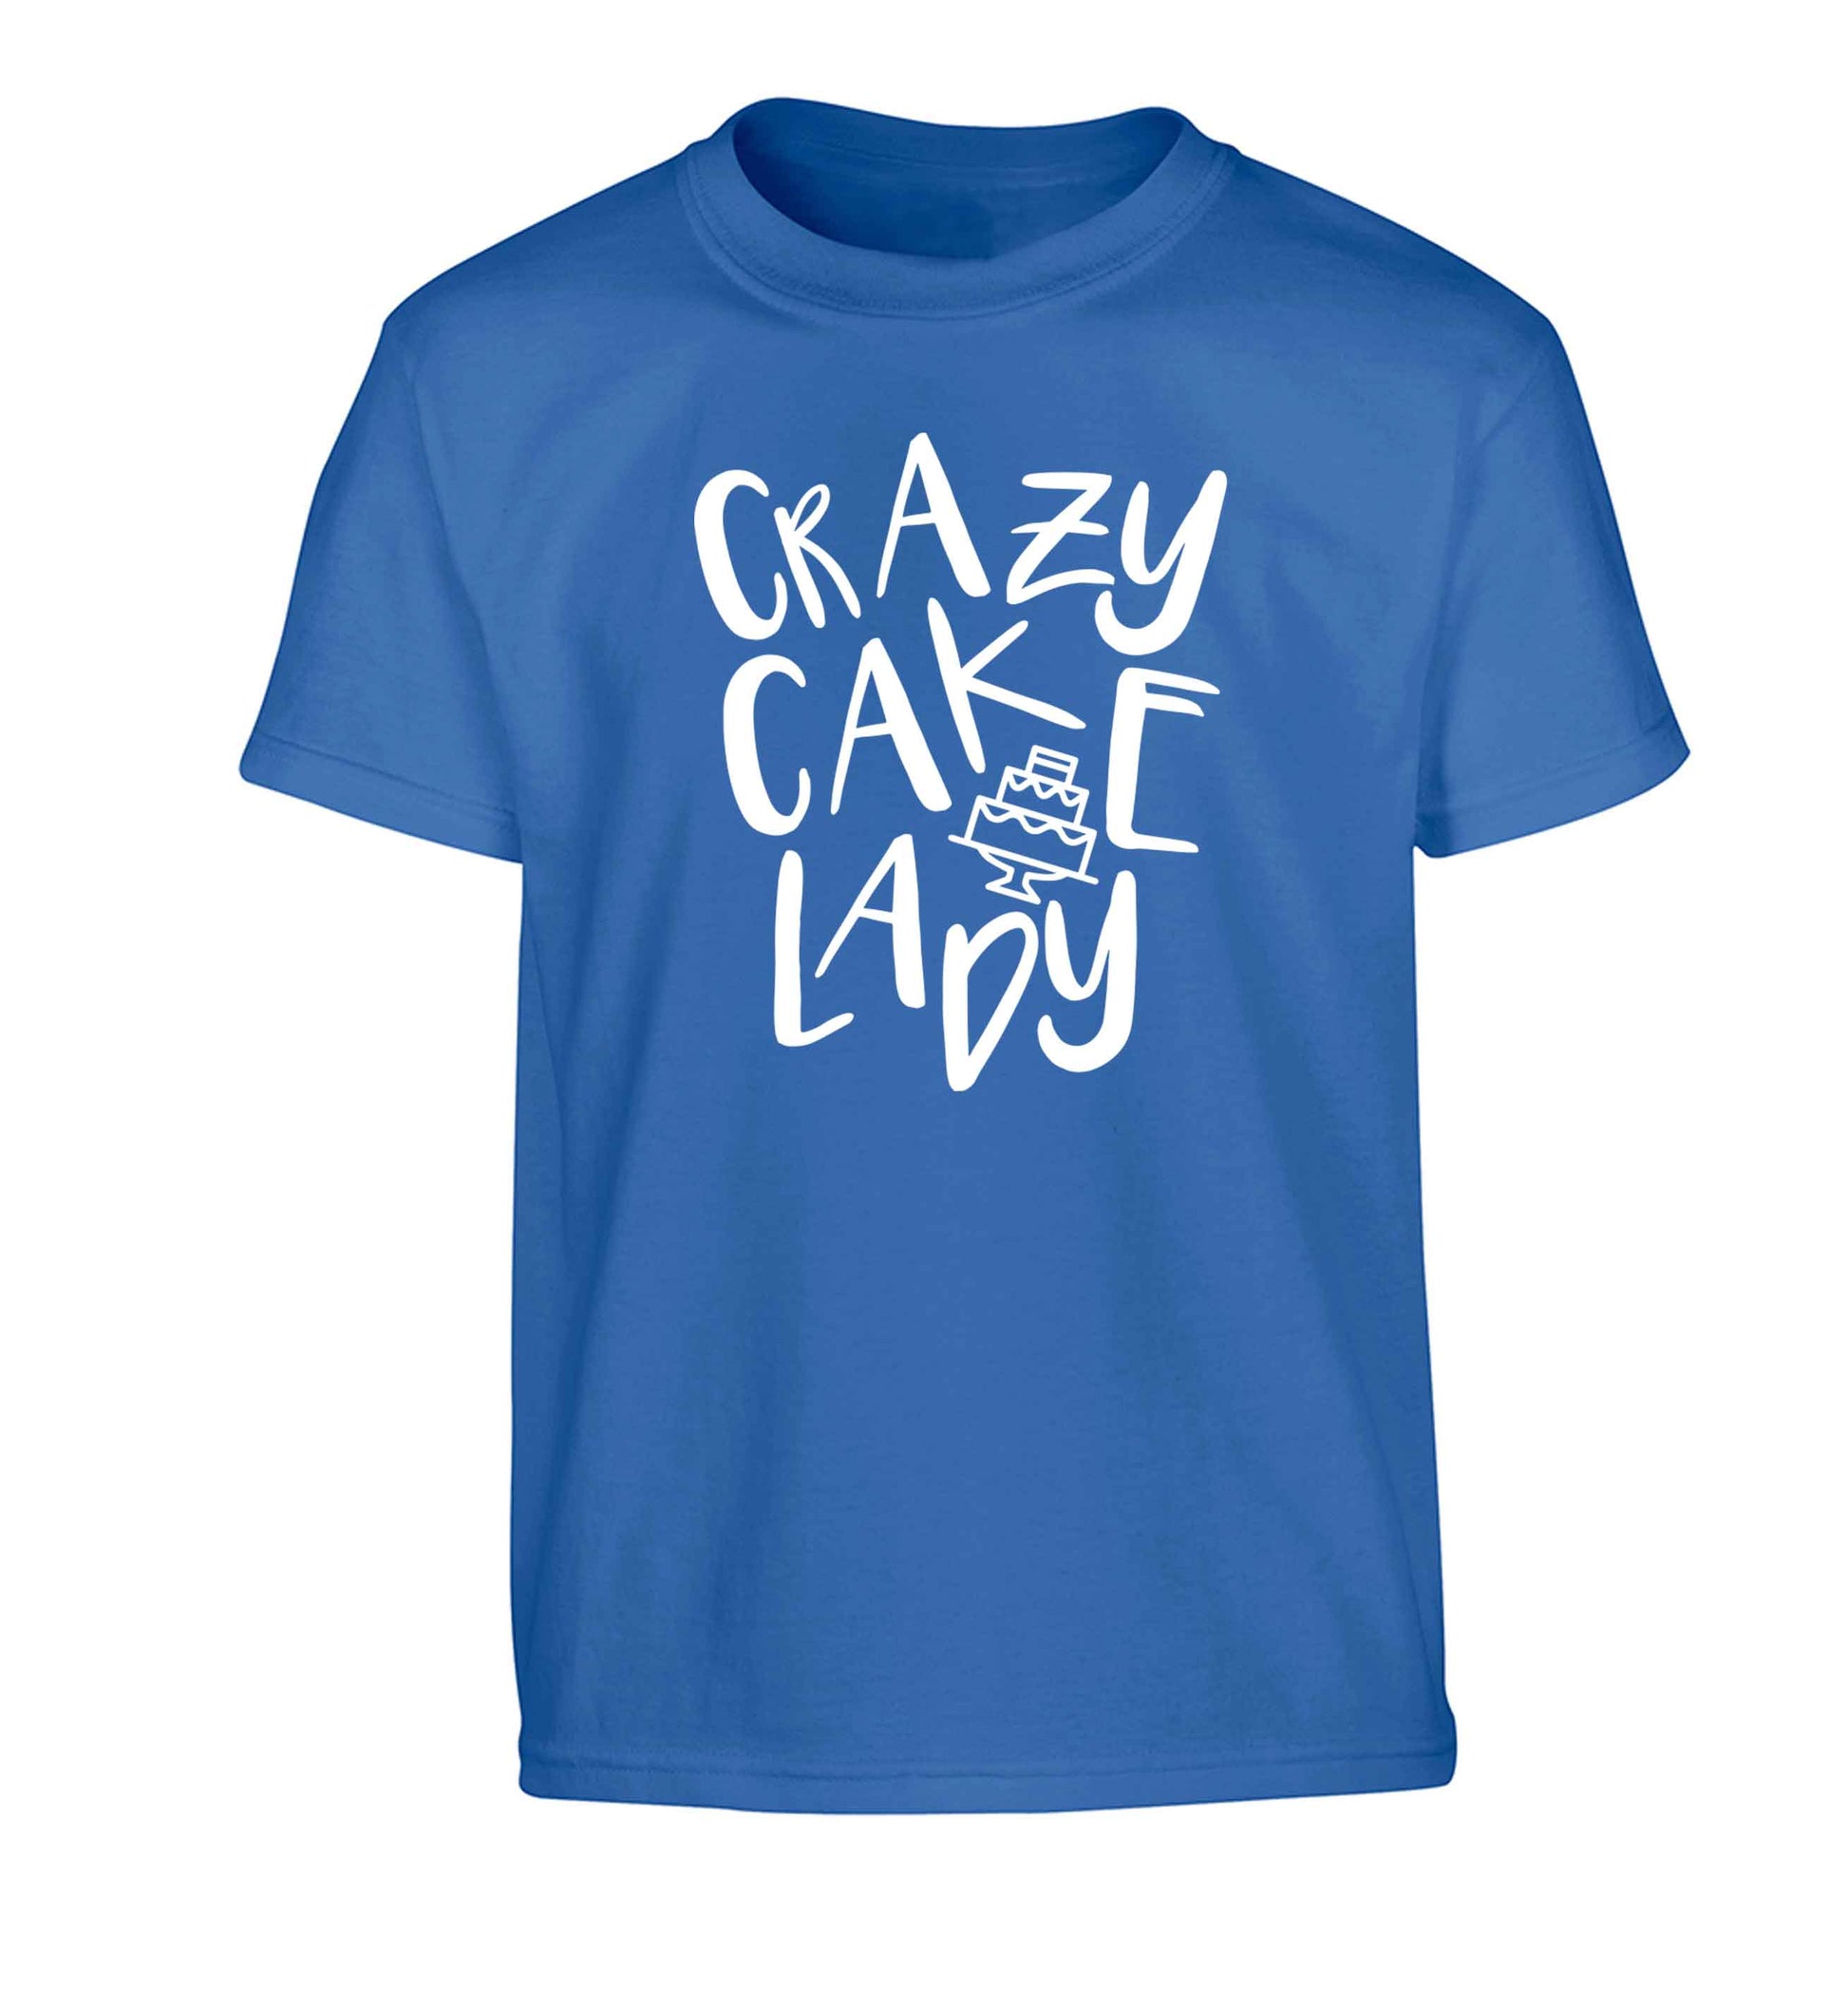 Crazy cake lady Children's blue Tshirt 12-13 Years